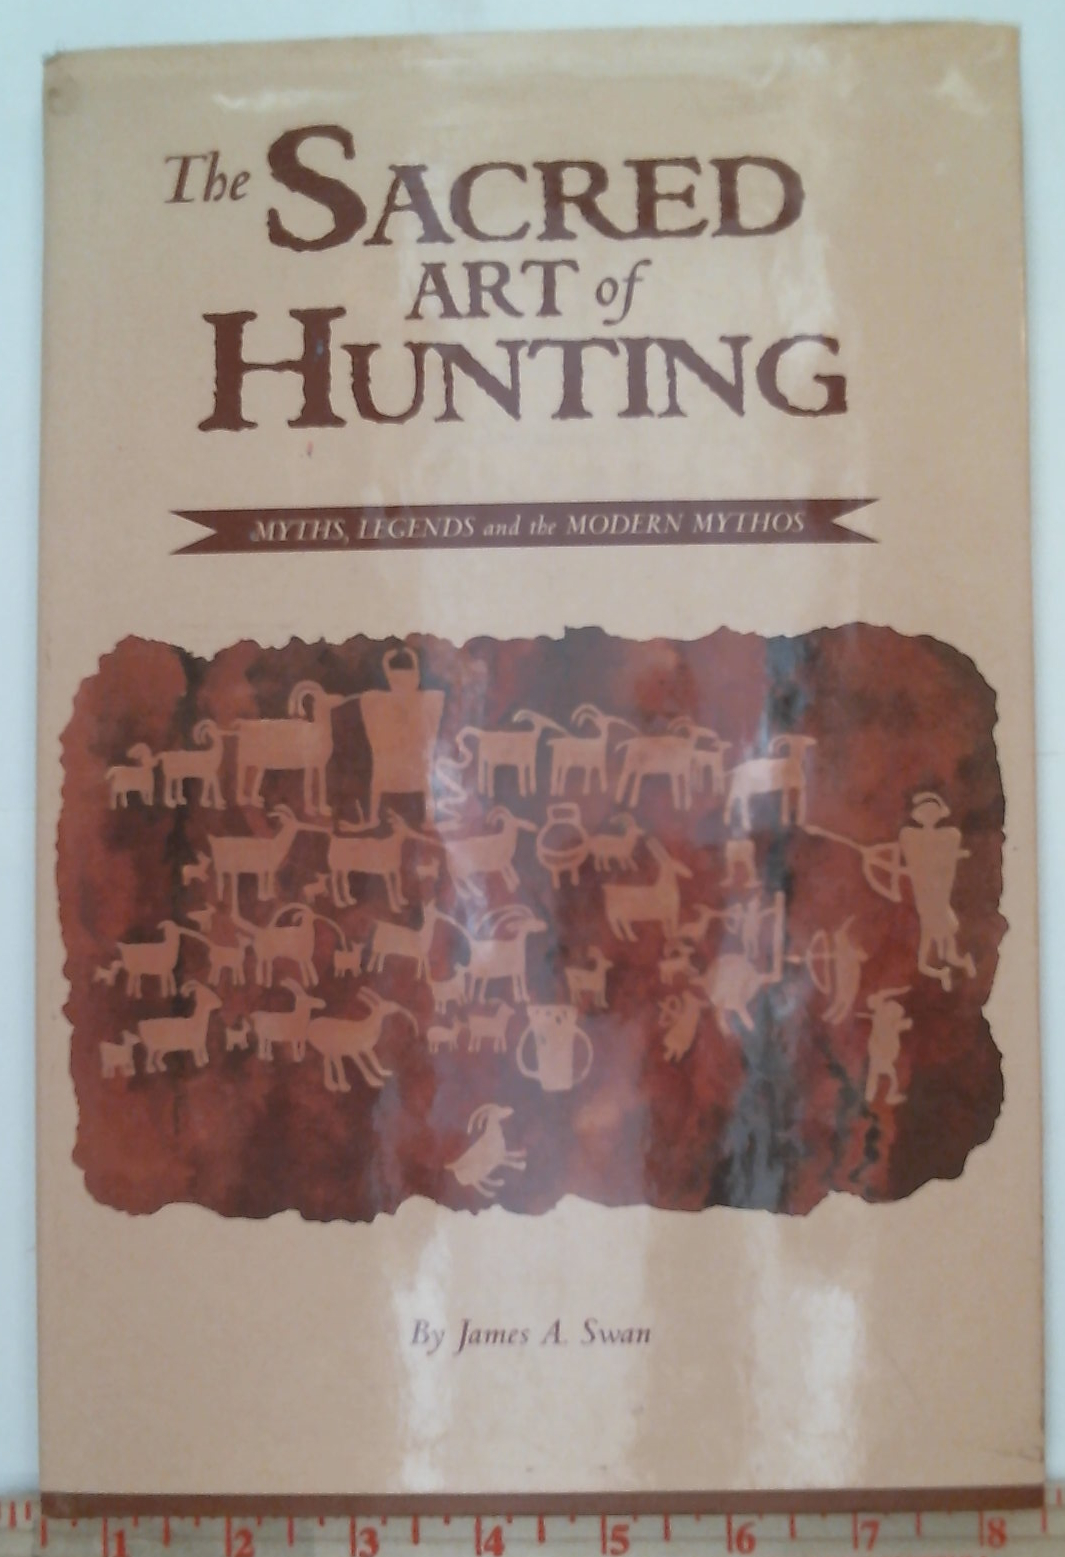 The Sacred Art of Hunting